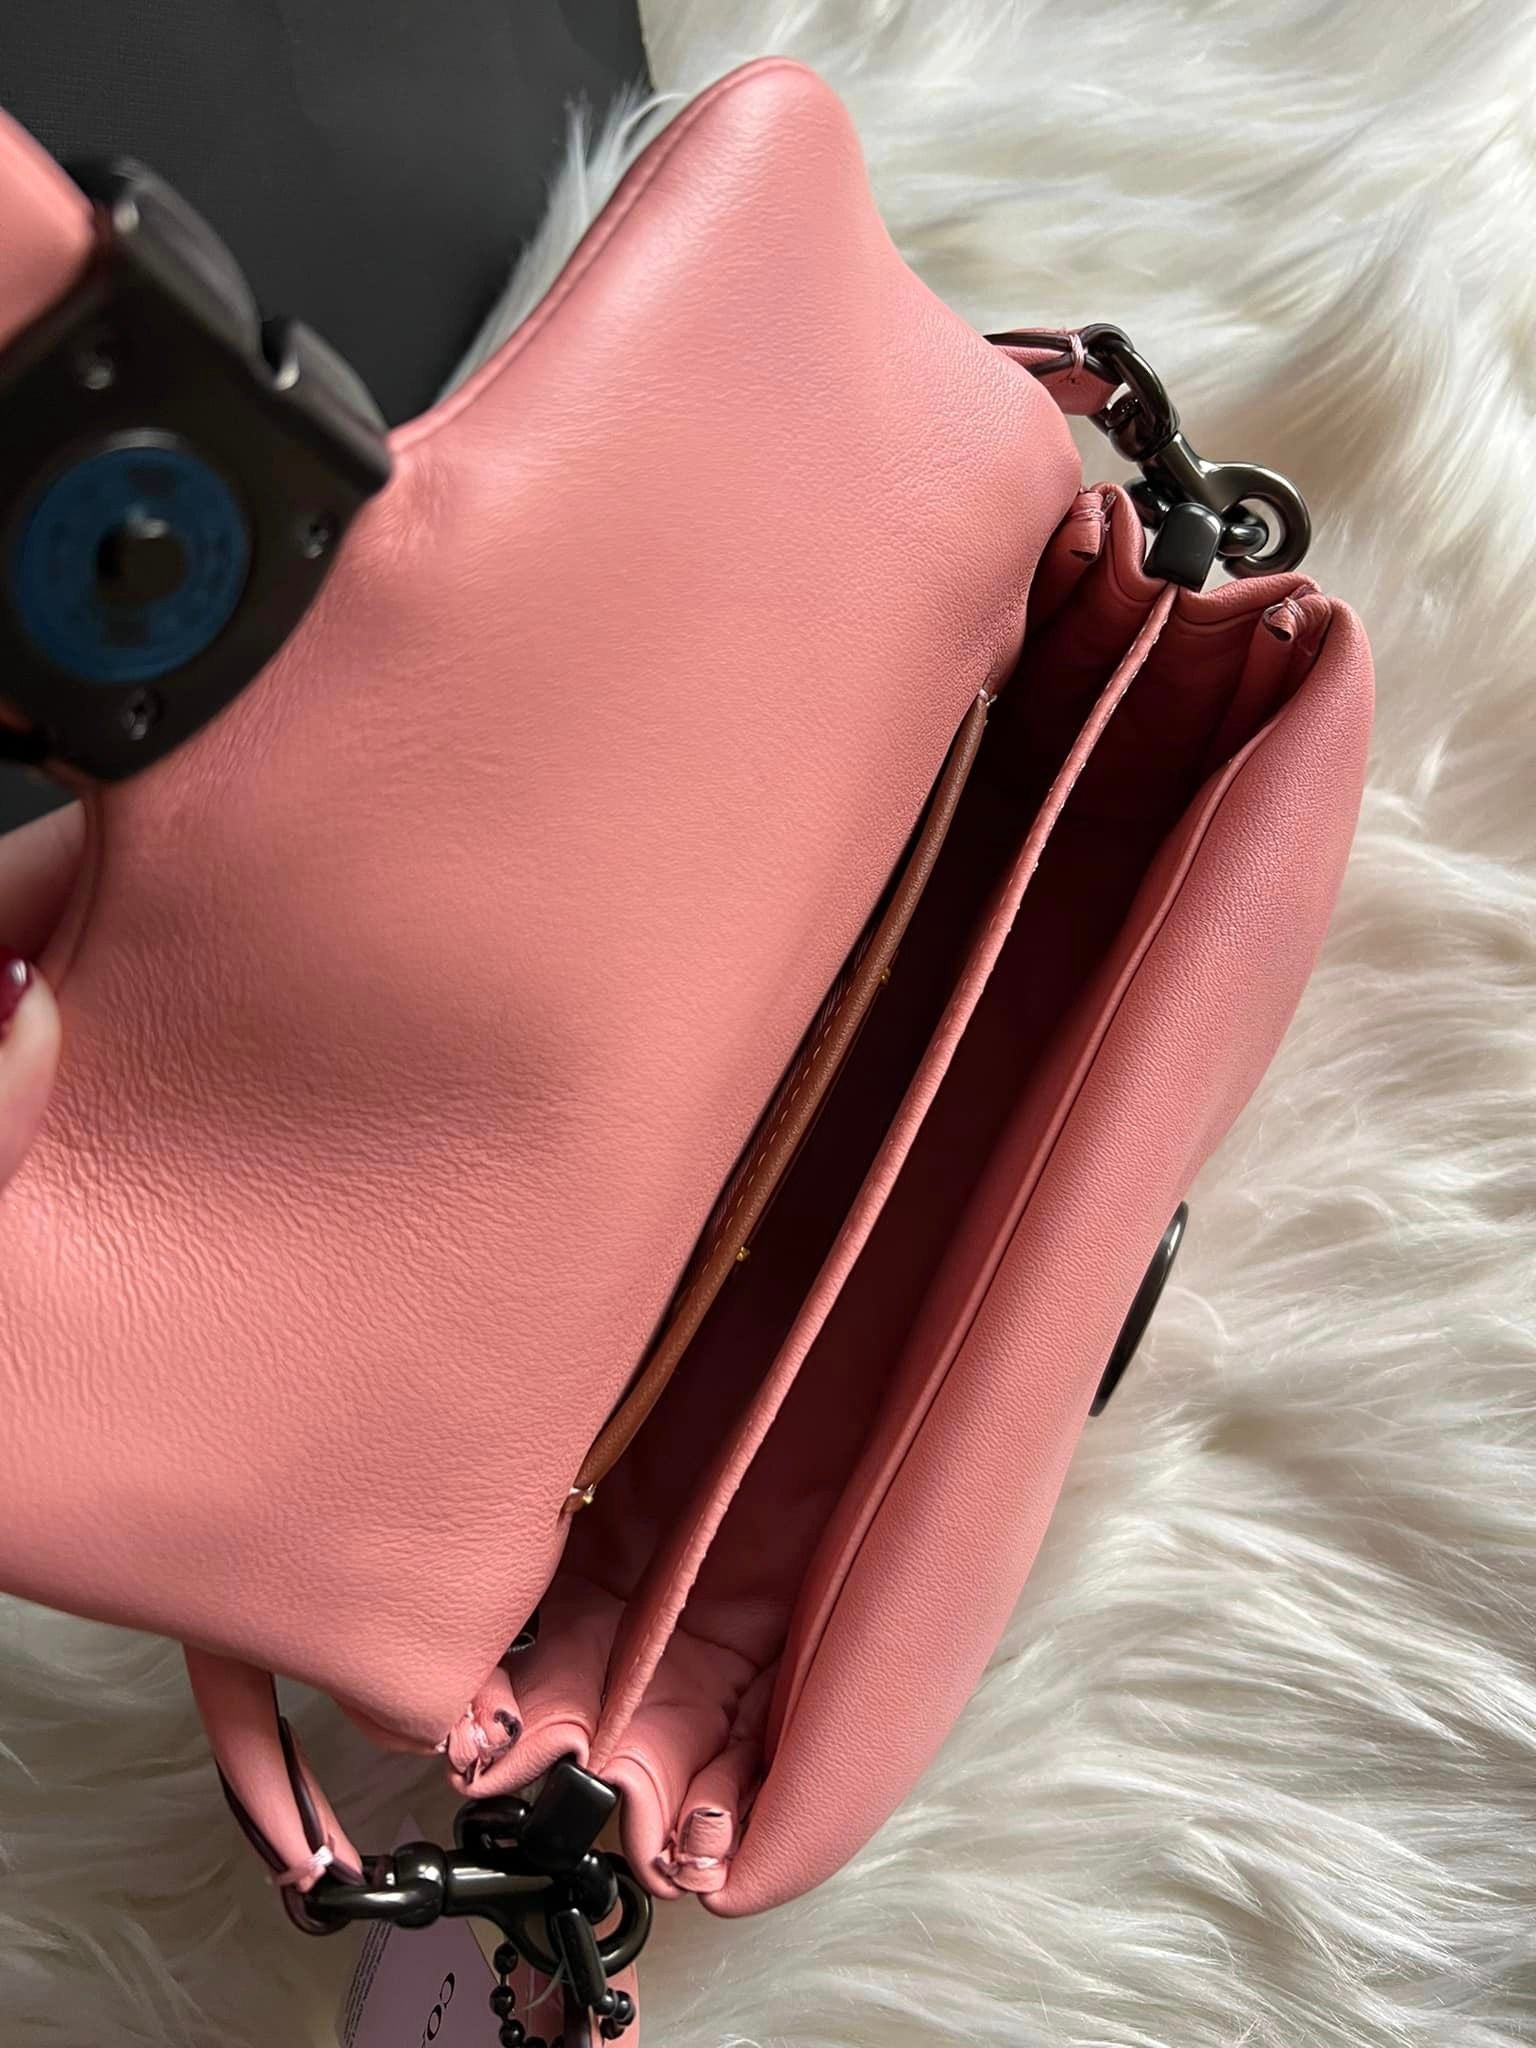 Pink soft pillow tabby 18 crossbody handbag from Coach in Flower